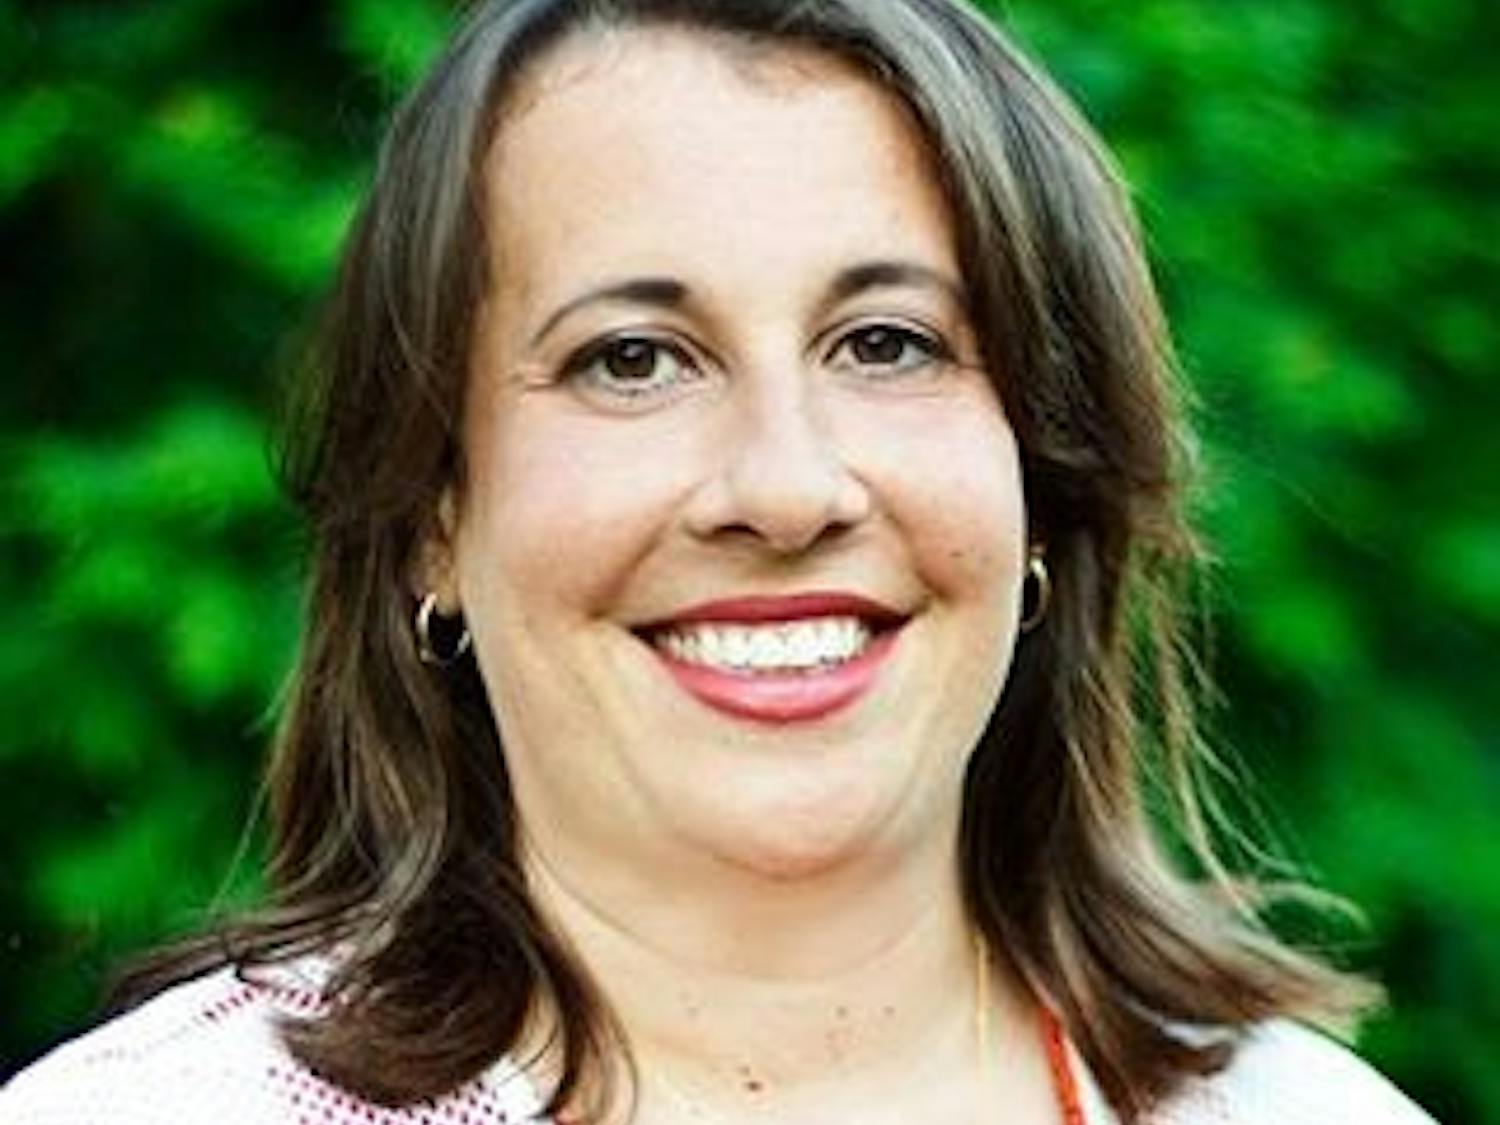 Ward 7 City Council candidate Laura Mirarchi